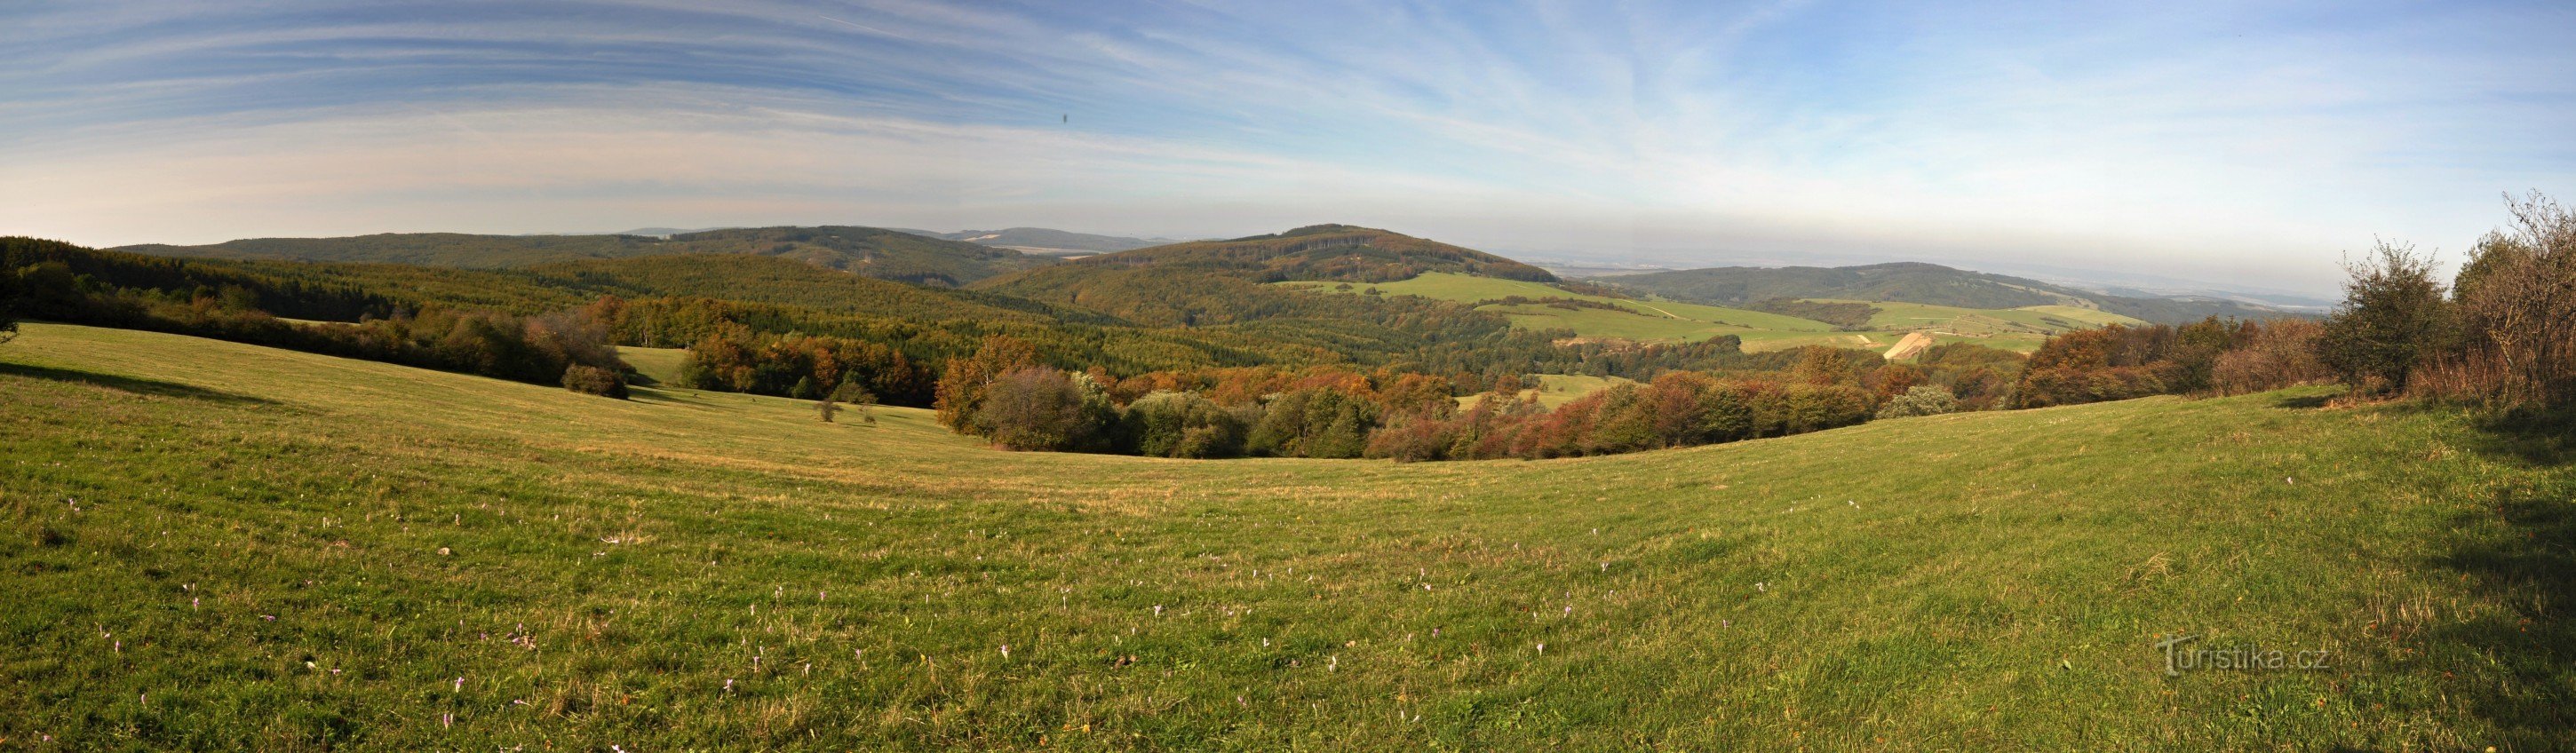 Carpazi Bianchi: vista da Kubíkova vrch